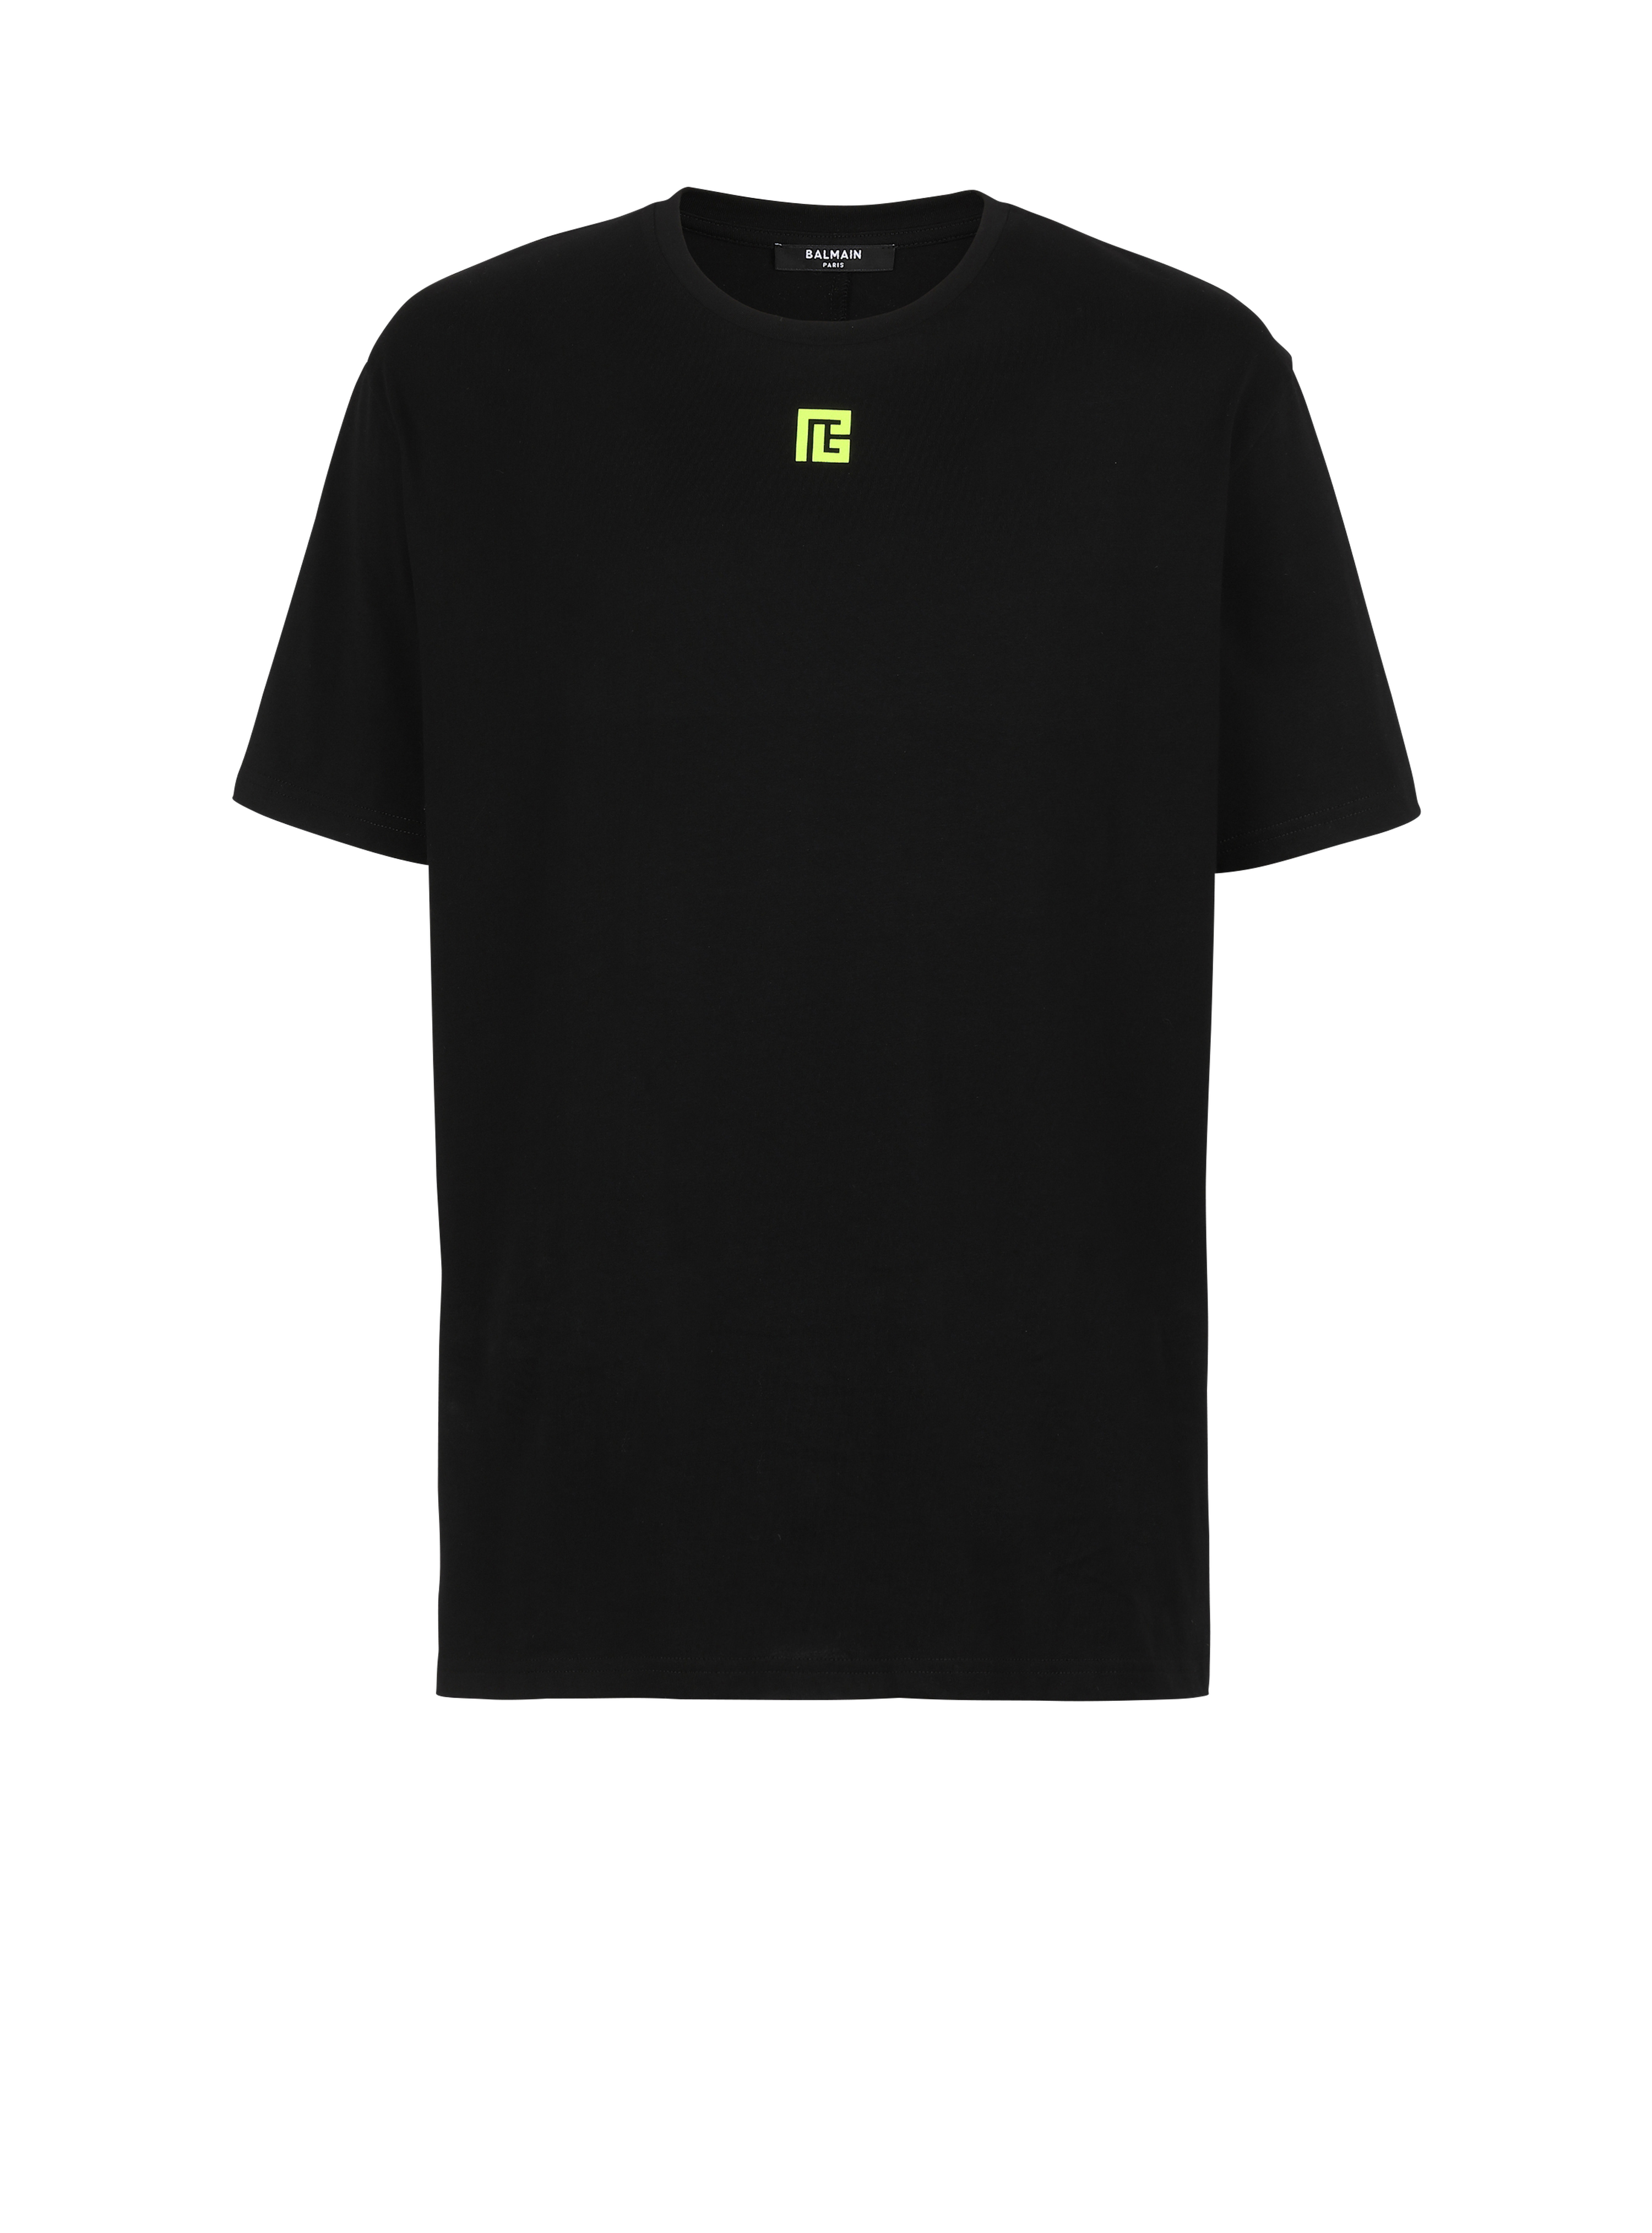 EXCLUSIVE - Cotton T-shirt with maxi Balmain logo print on back, black